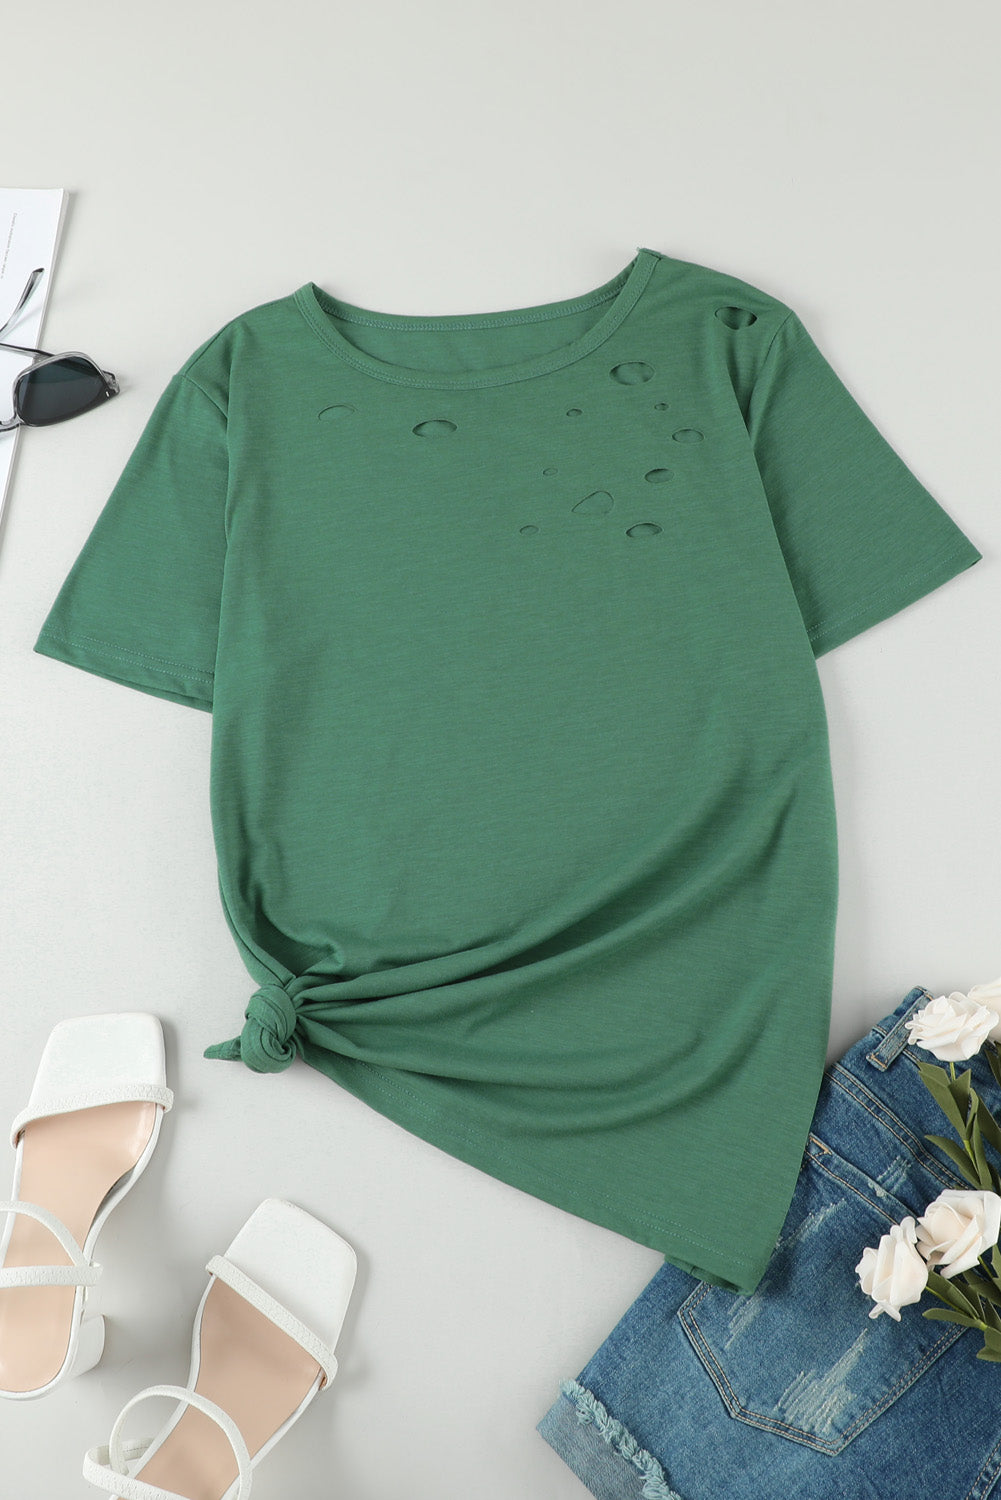 Green Holes T-Shirt aus Baumwollmischung mit Rundhalsausschnitt